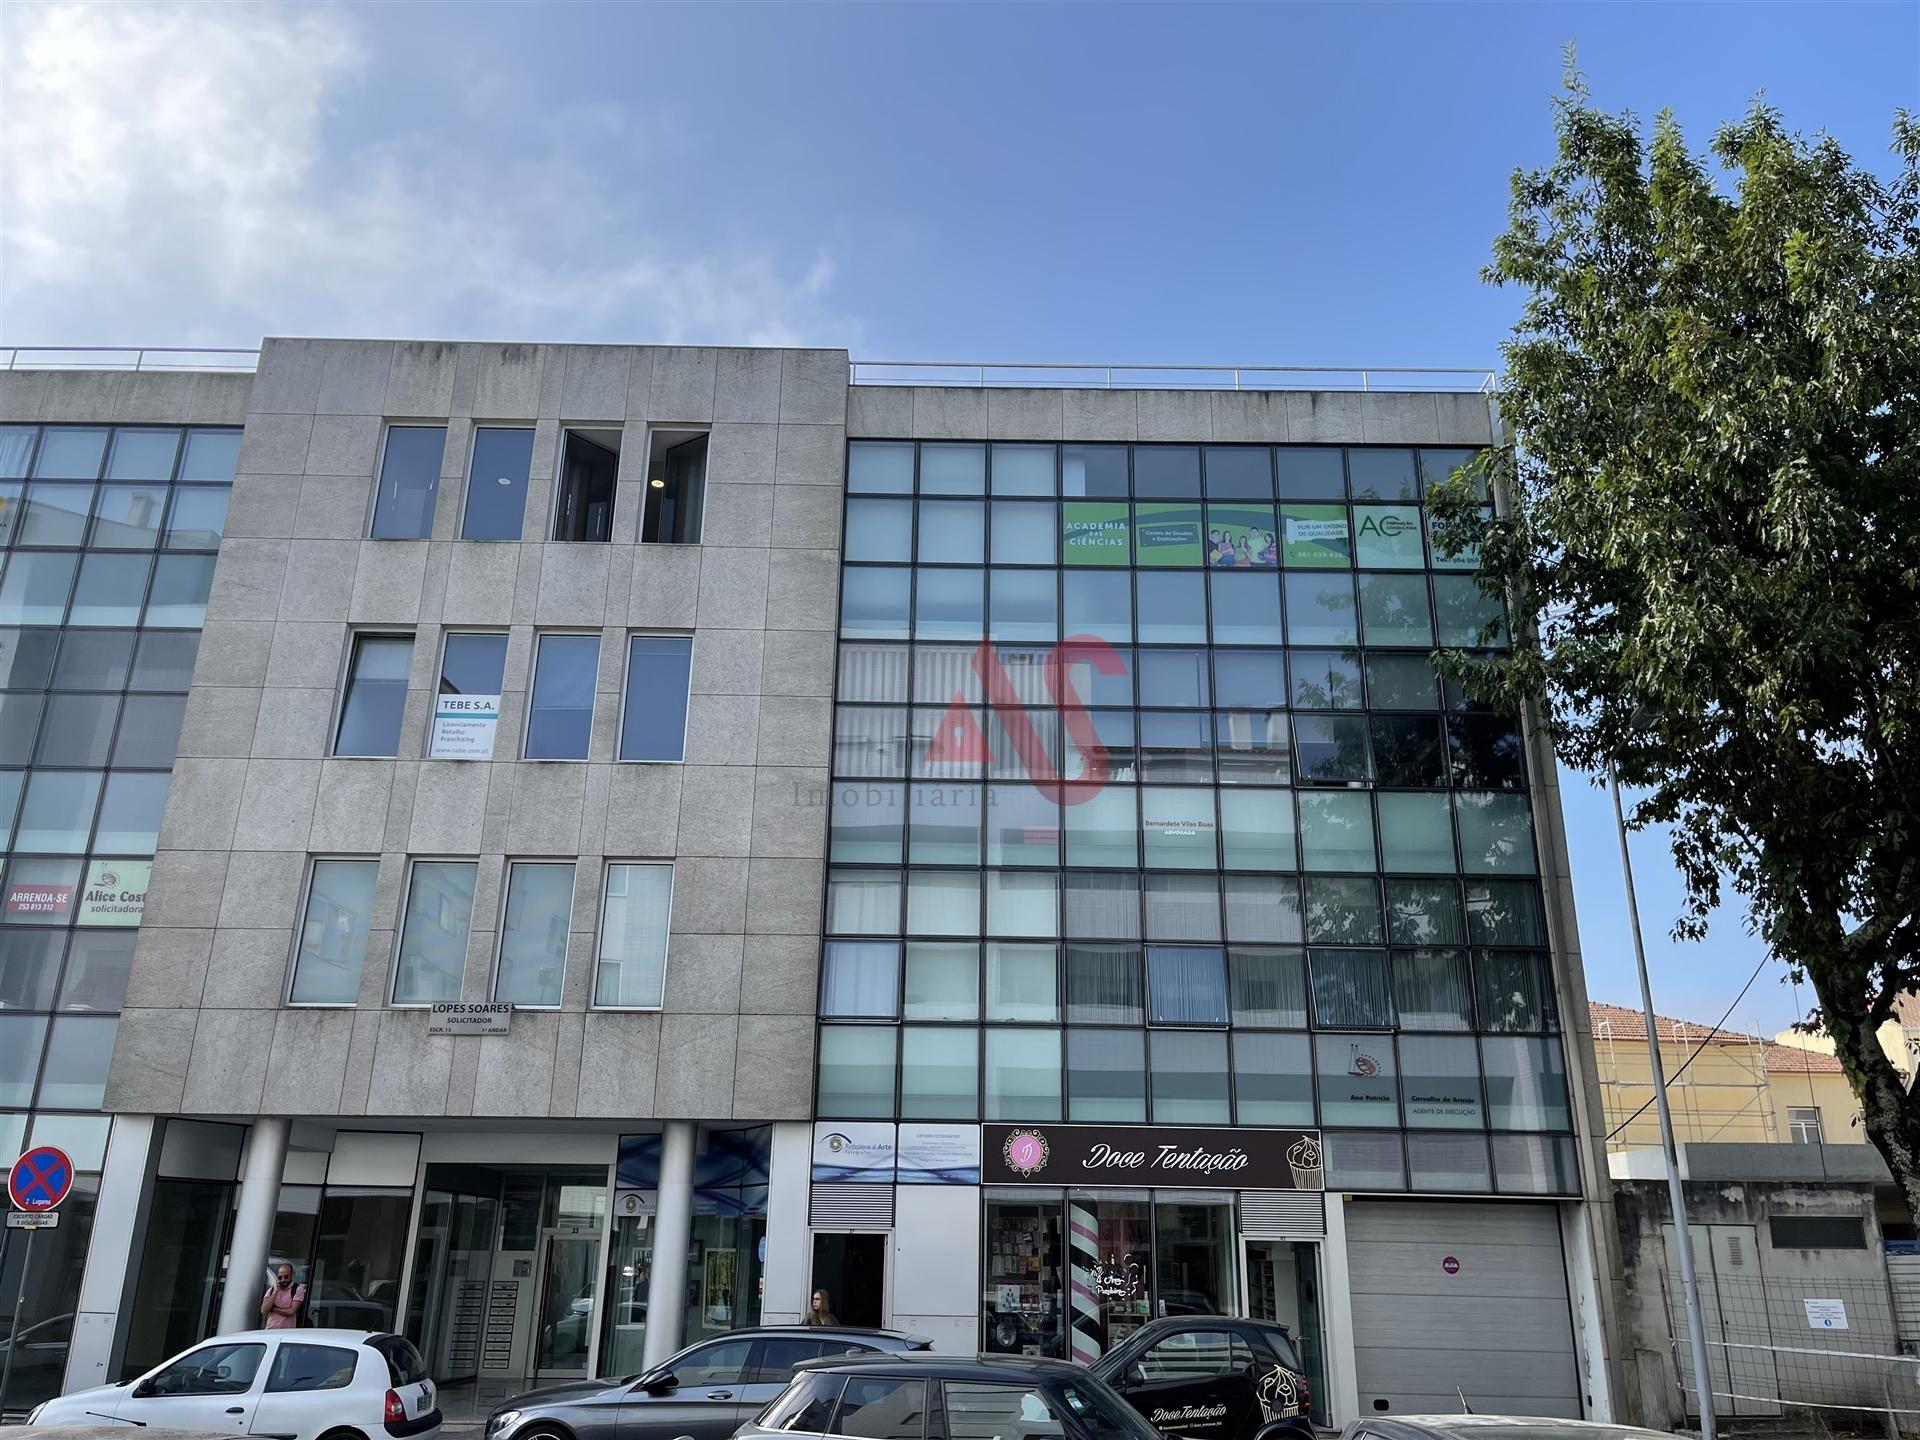 Escritório para arrendamento no centro de Barcelos